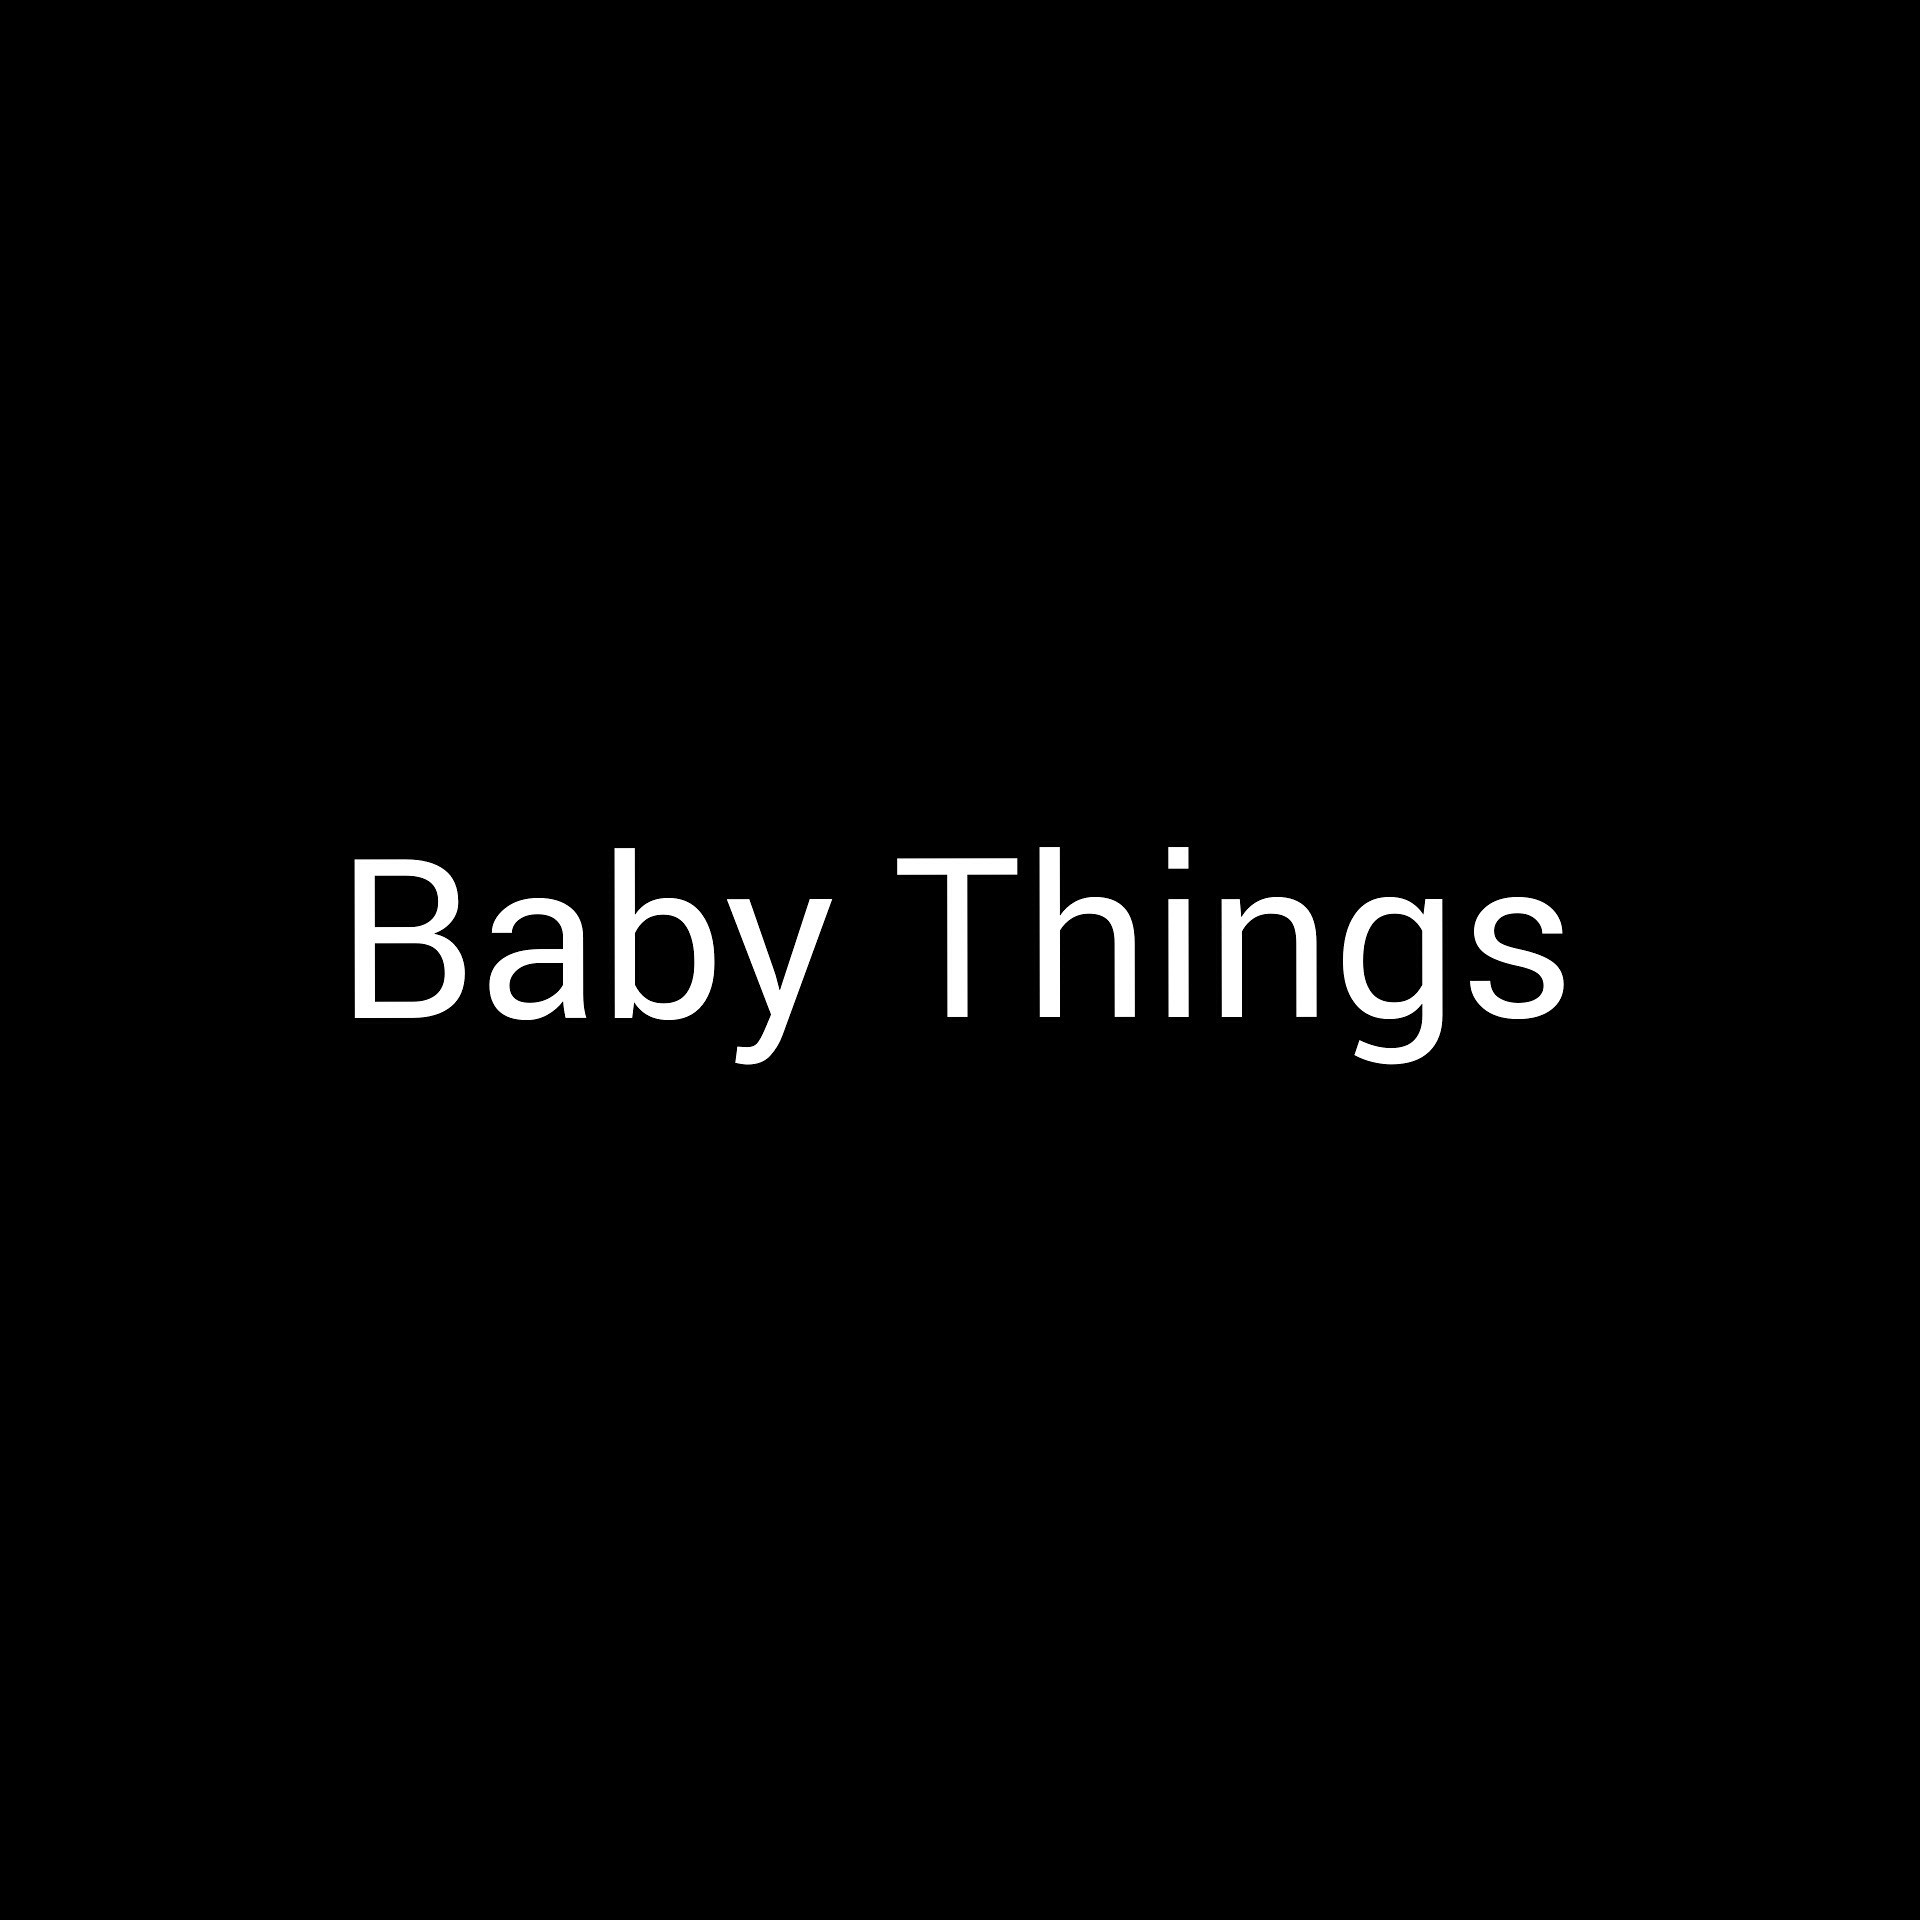 Baby Things - A Phoenix James Film